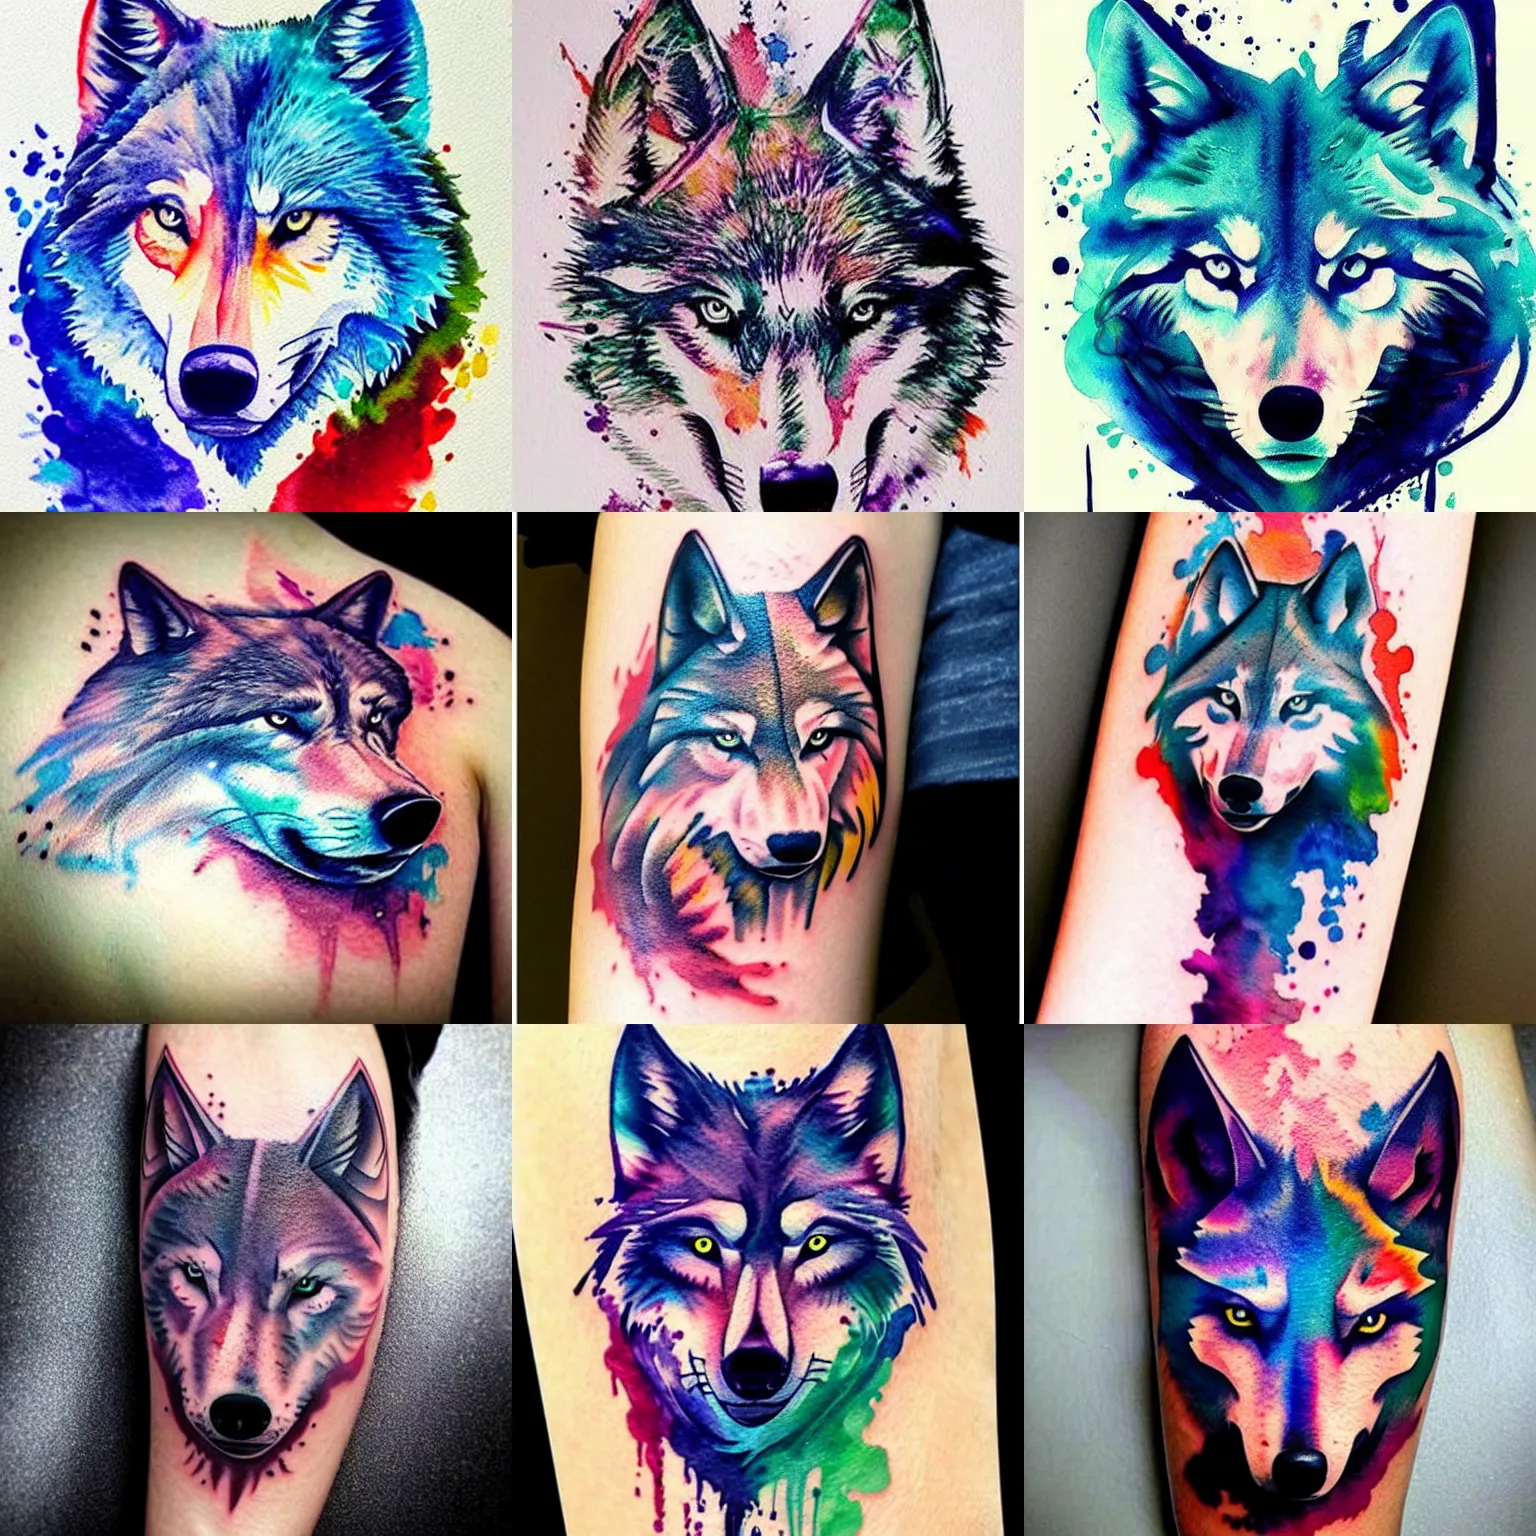 Rainbow-Colored Tattoo Ideas